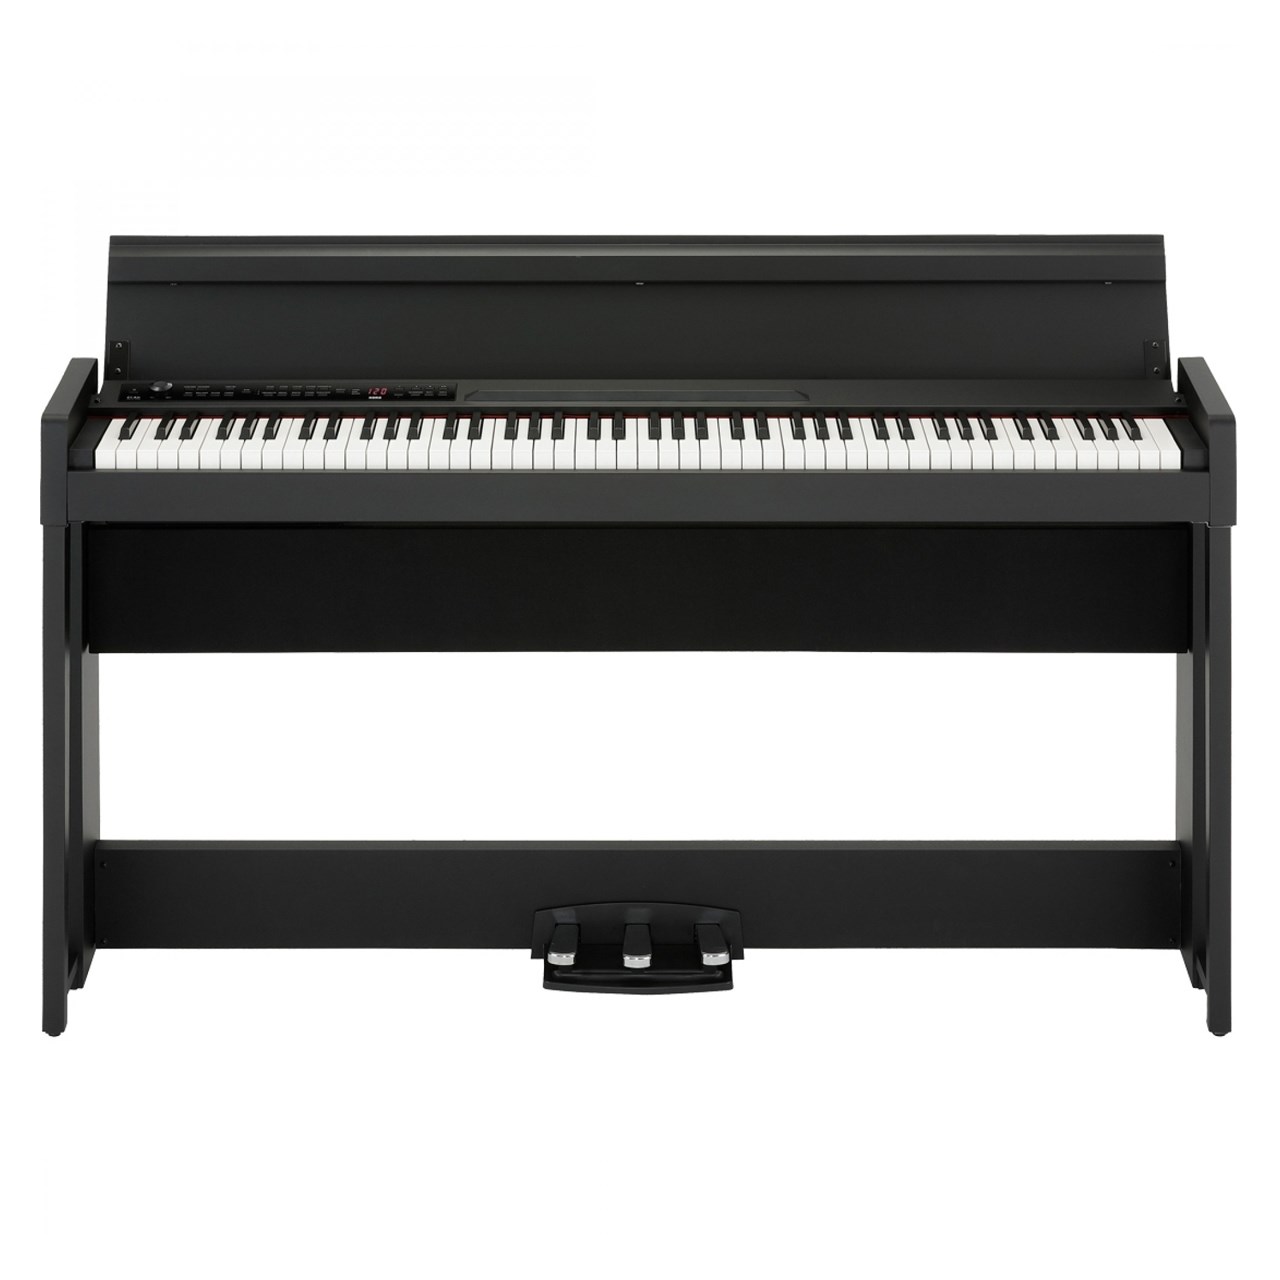 پیانو دیجیتال کرگ مدل C1 Air